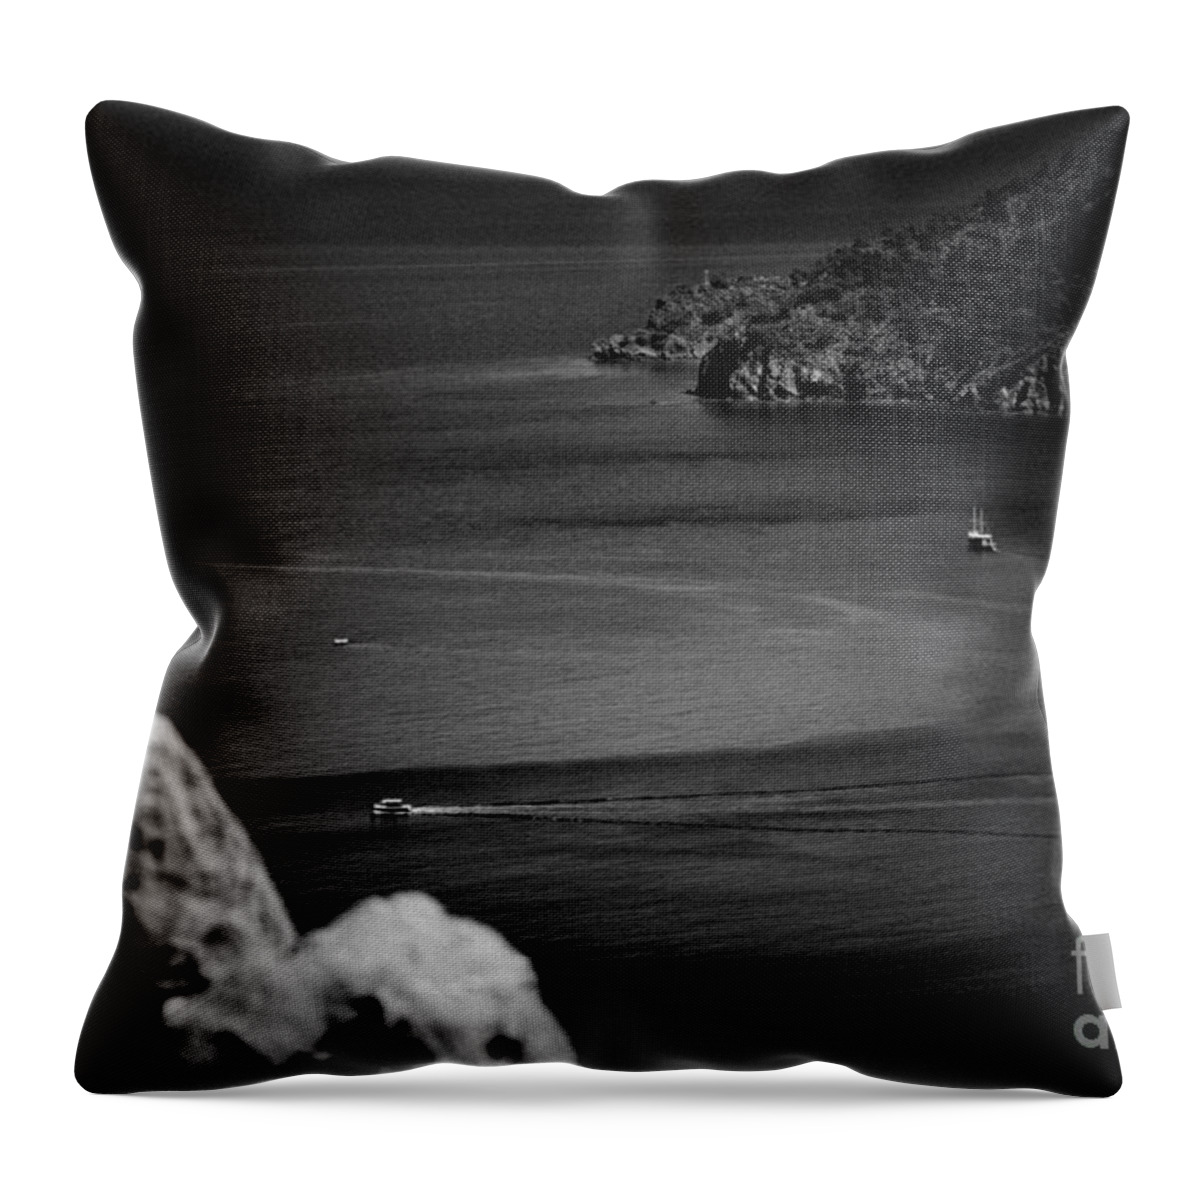 Water Throw Pillow featuring the photograph Seascape Turkey Artmif by Raimond Klavins